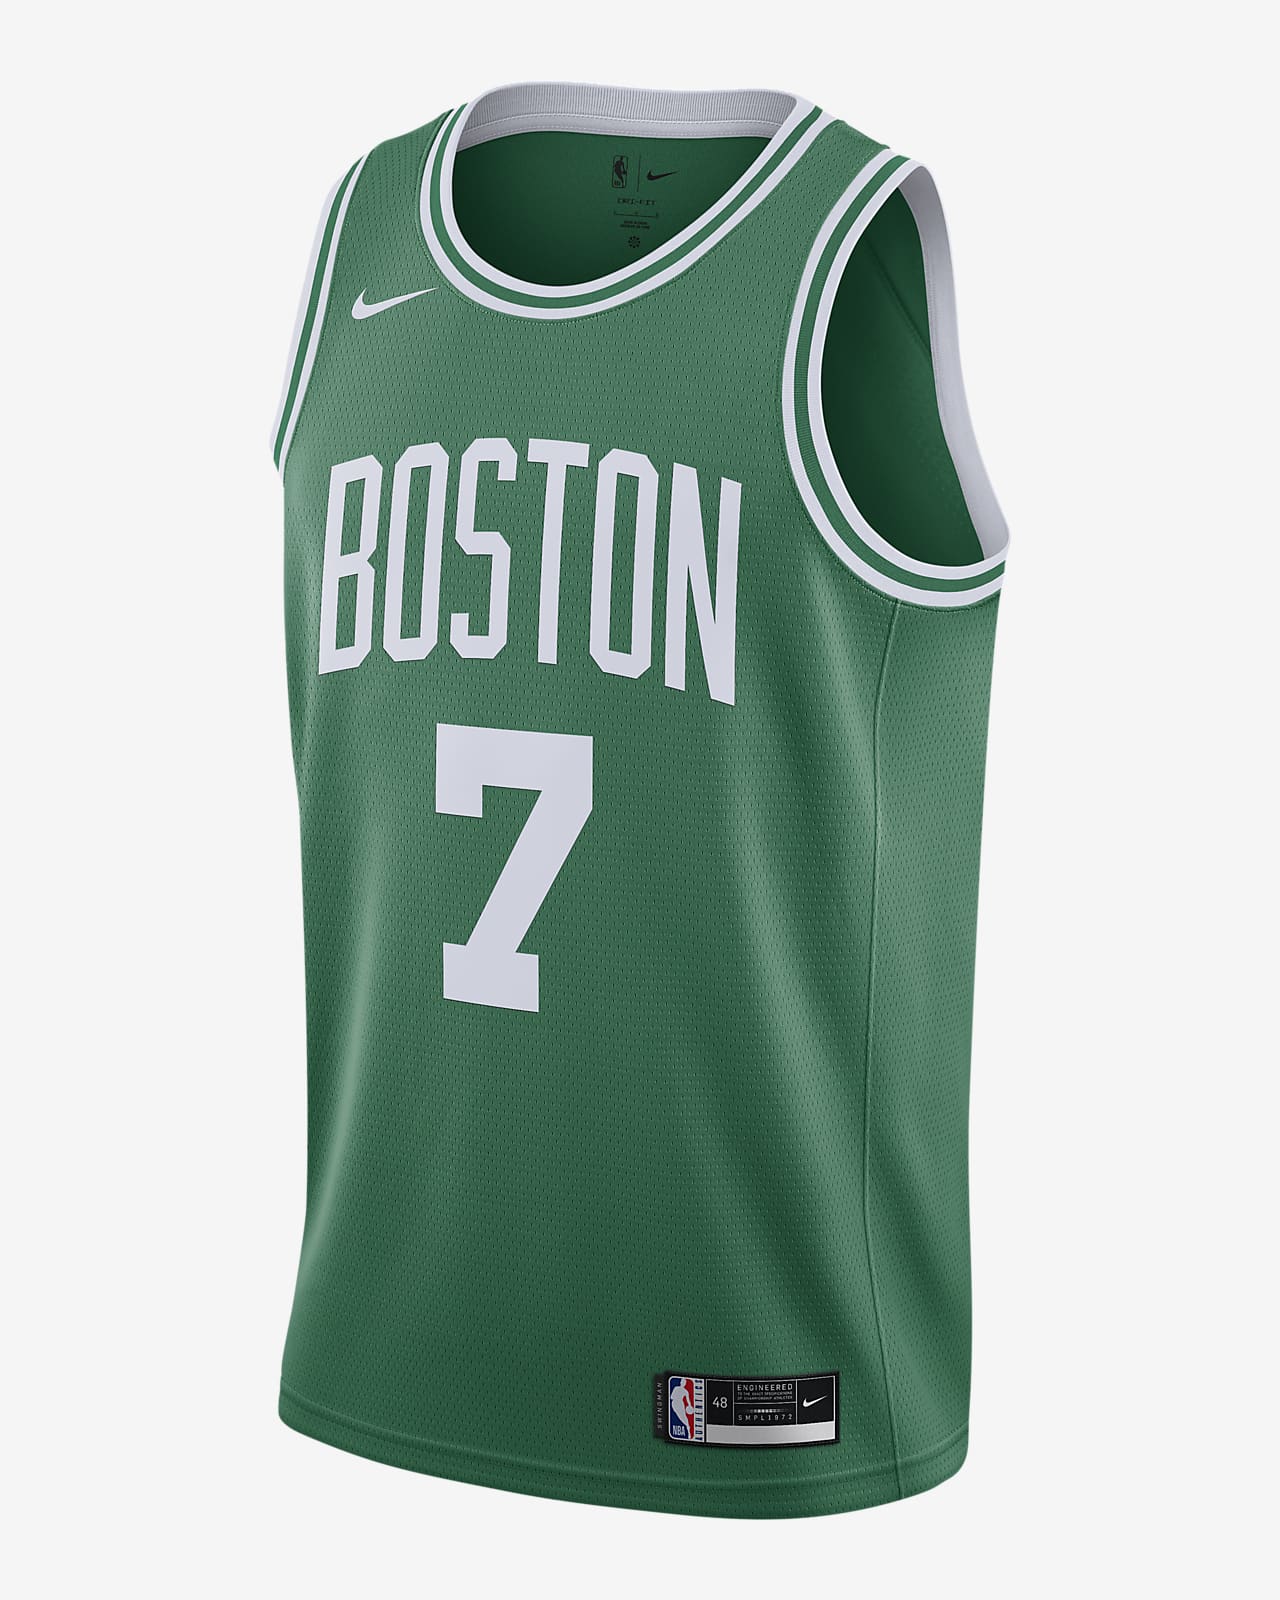 2020 赛季波士顿凯尔特人队 Icon Edition Nike NBA Swingman Jersey 男子球衣